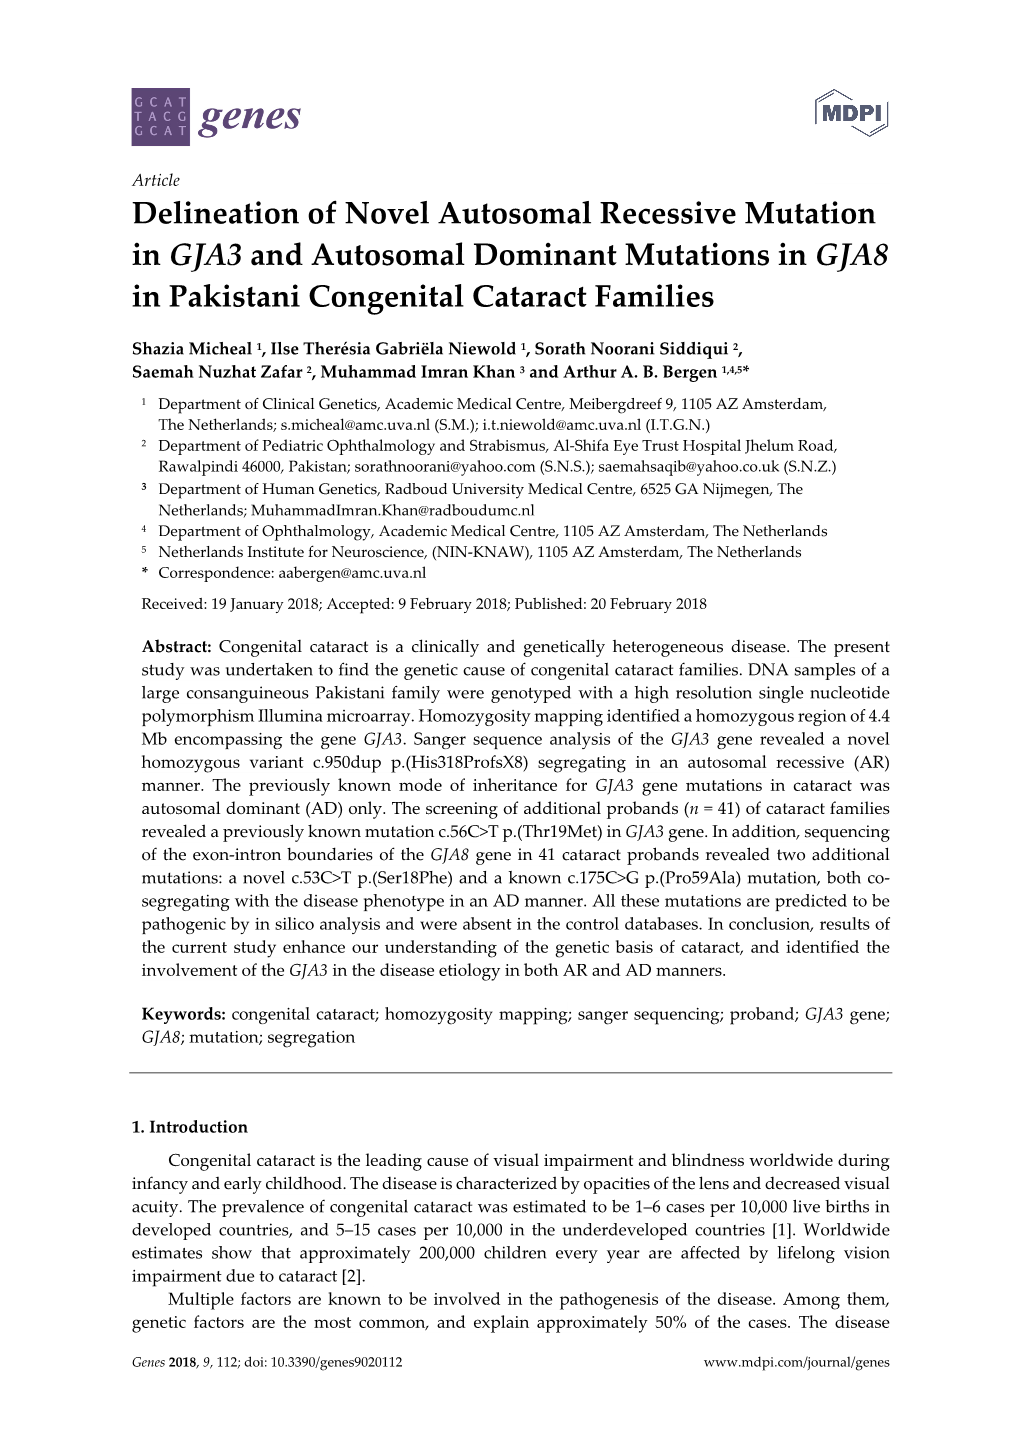 Delineation of Novel Autosomal Recessive Mutation in GJA3 and Autosomal Dominant Mutations in GJA8 in Pakistani Congenital Cataract Families